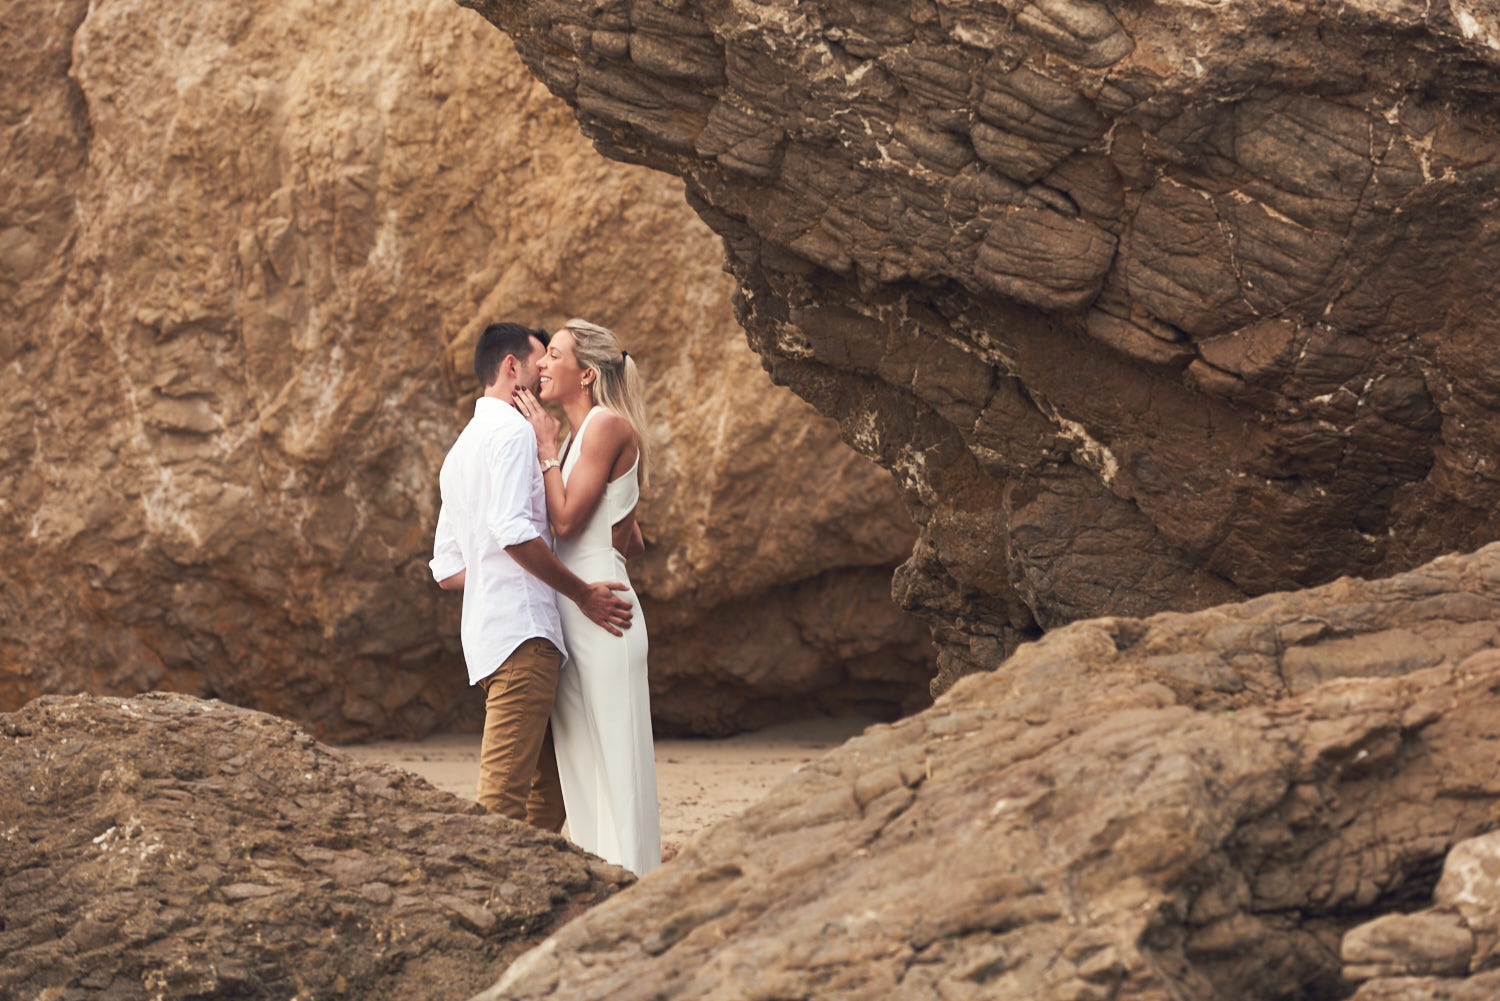 Engagement photos near rocks and cliffs